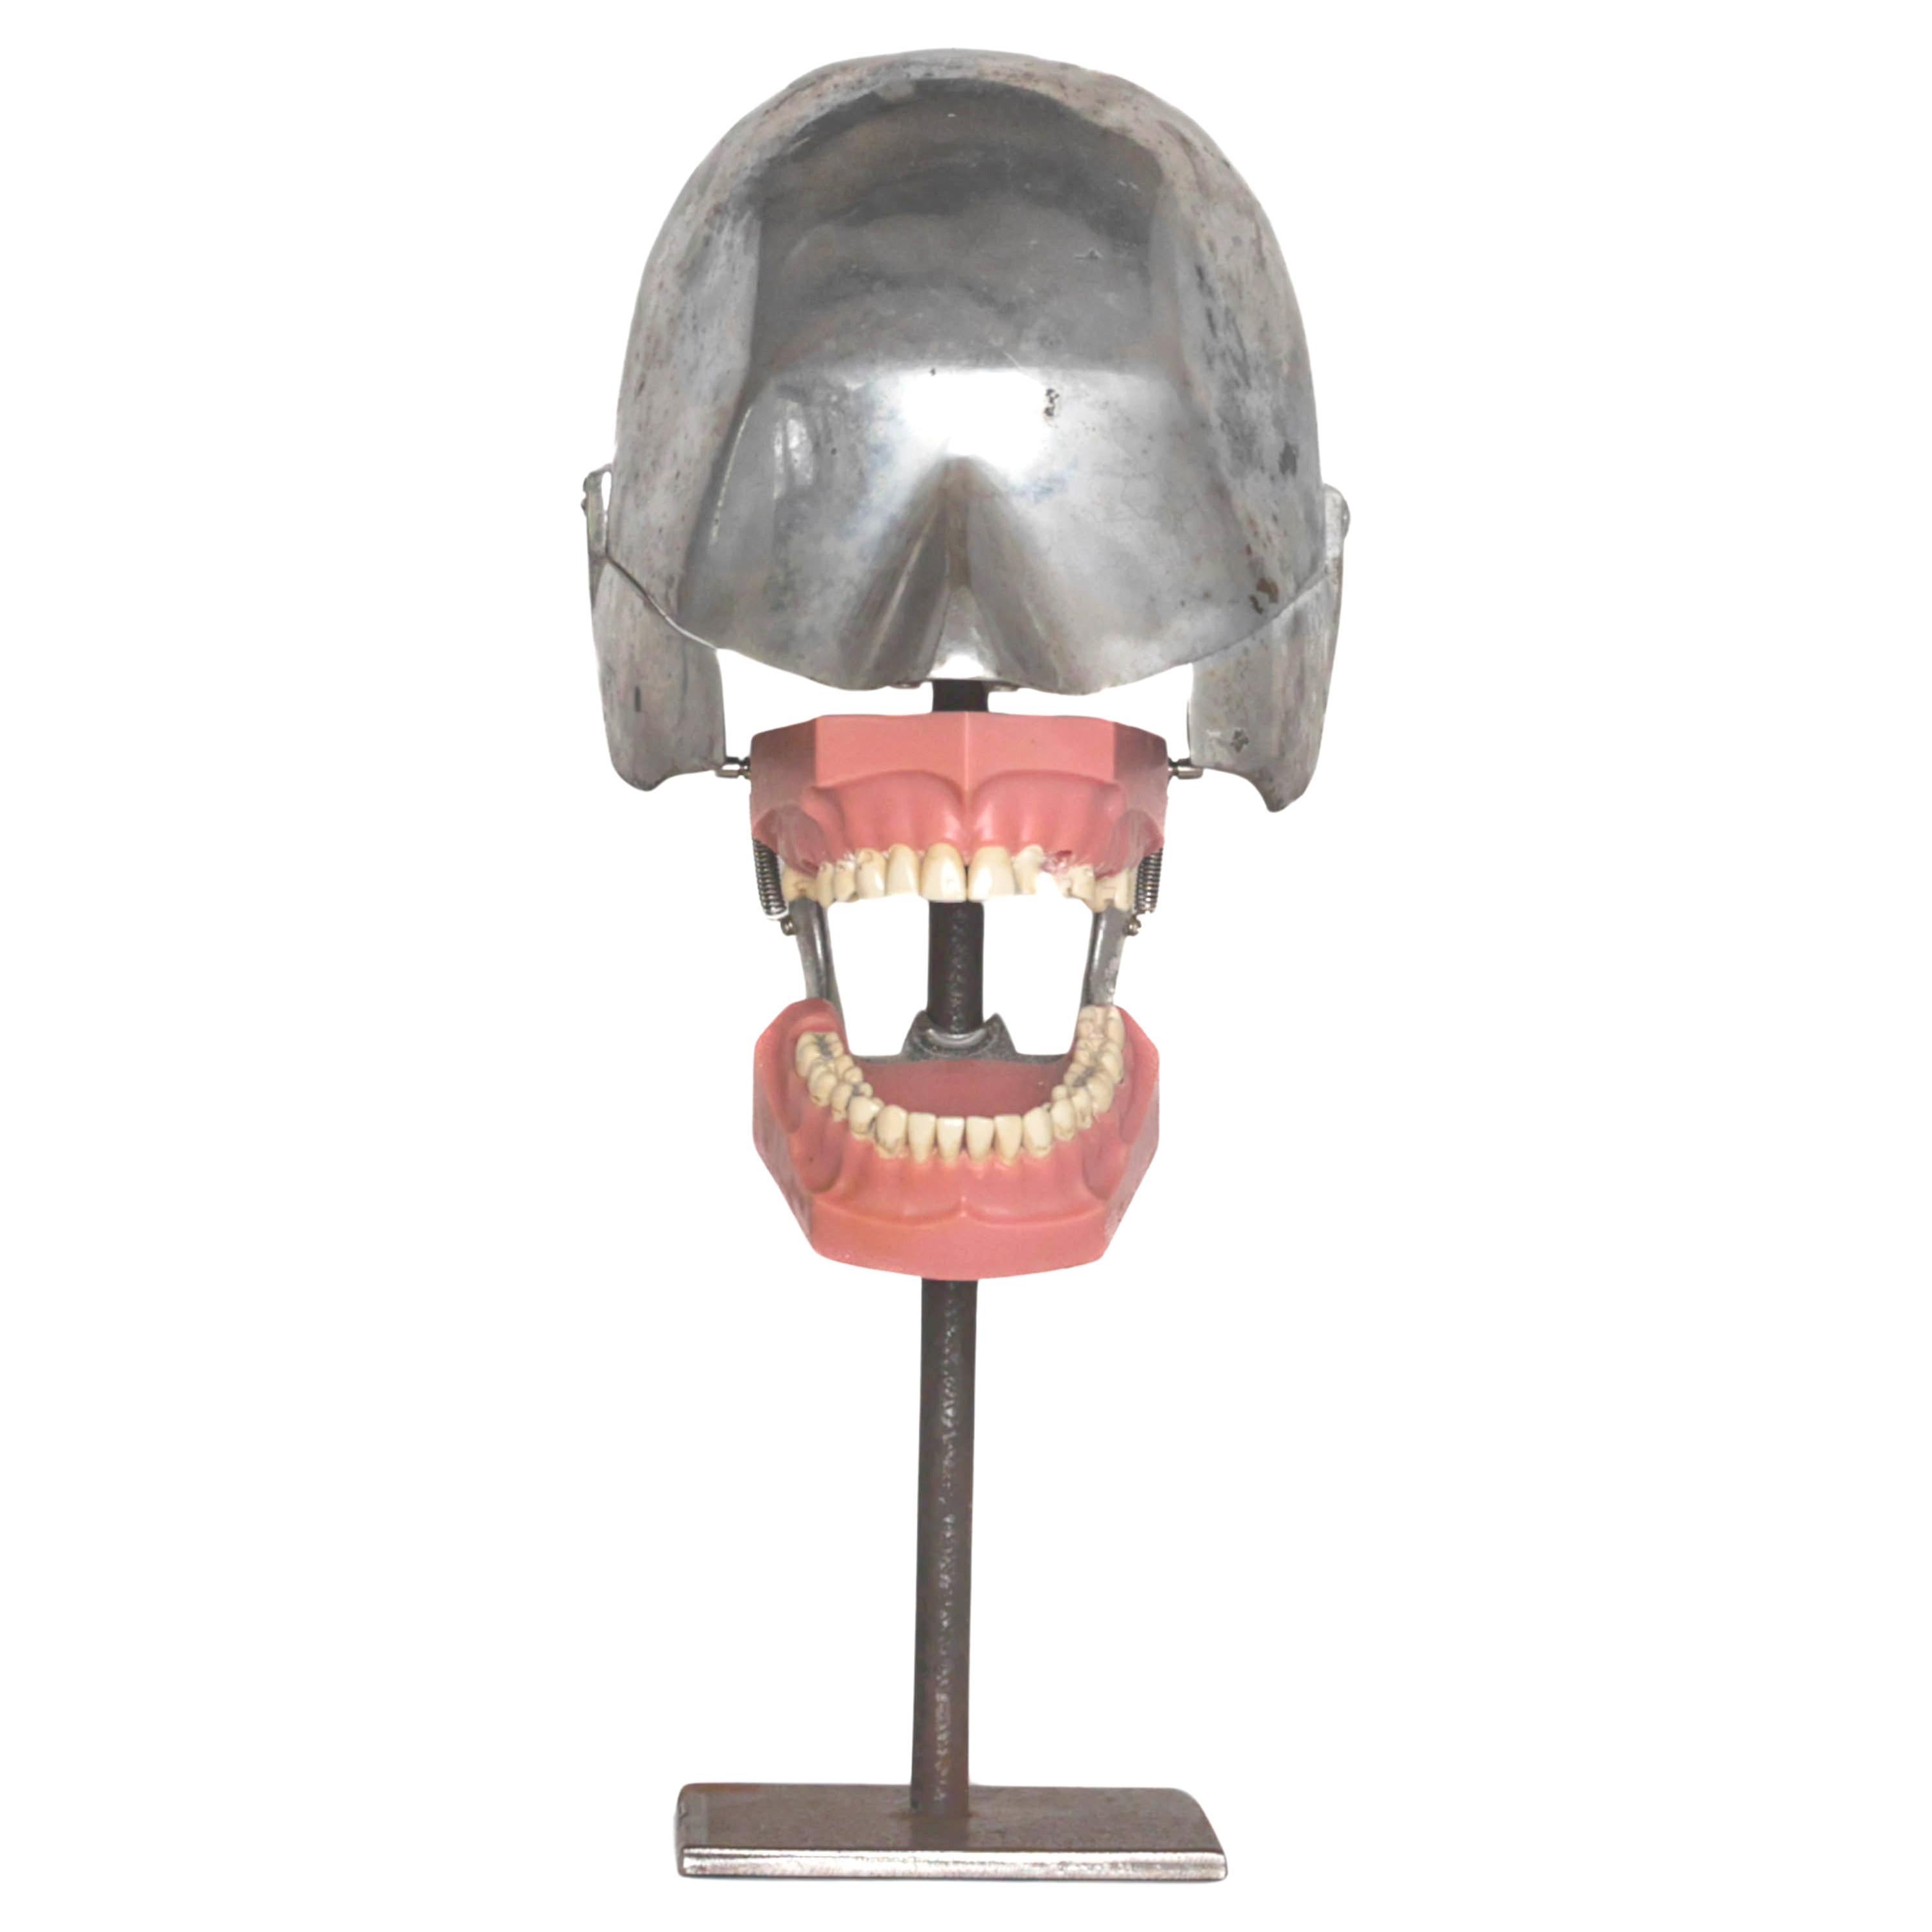 Dental Phantom Head Model with Rubber Head Mask